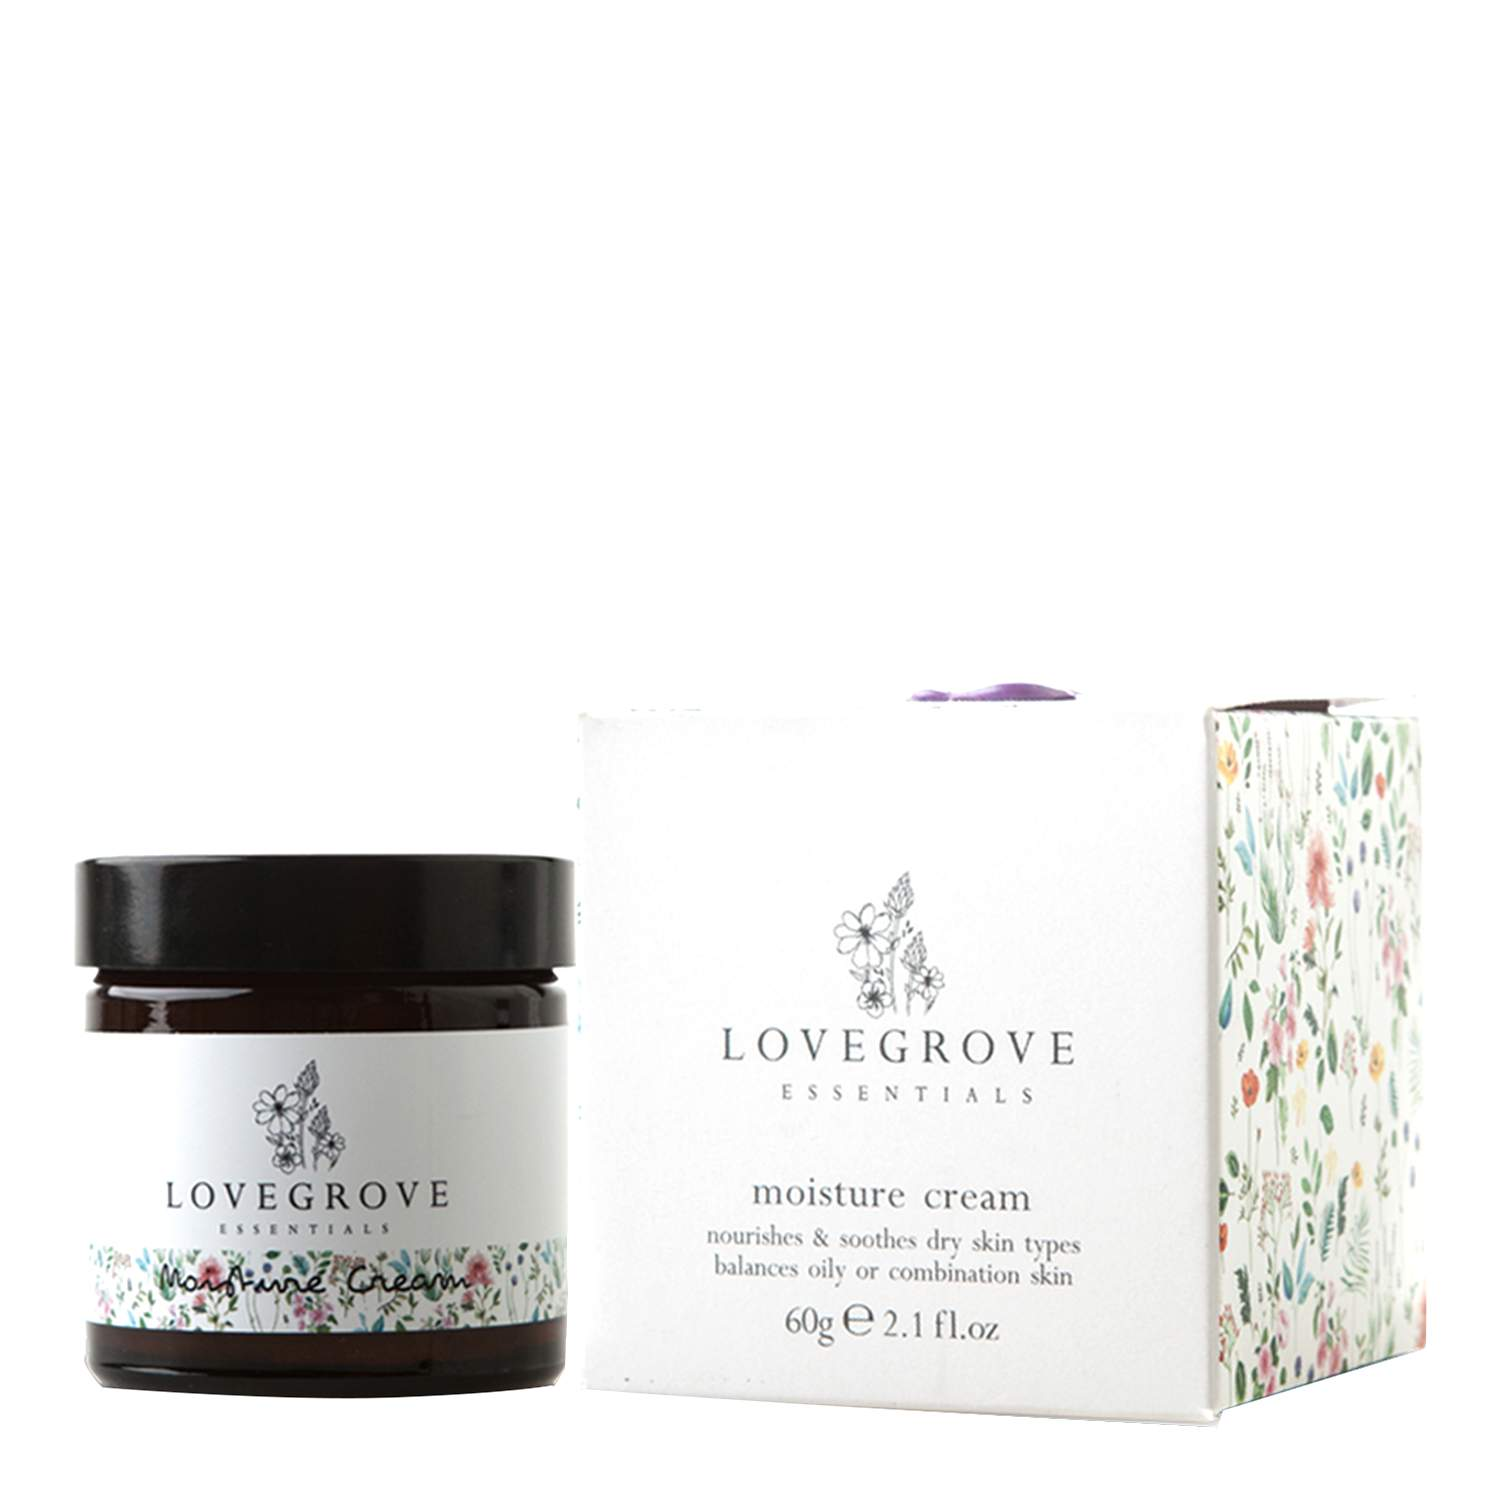 Lovegrove Essentials Moisture Cream Lovegrove Essentials Moisture Cream 1